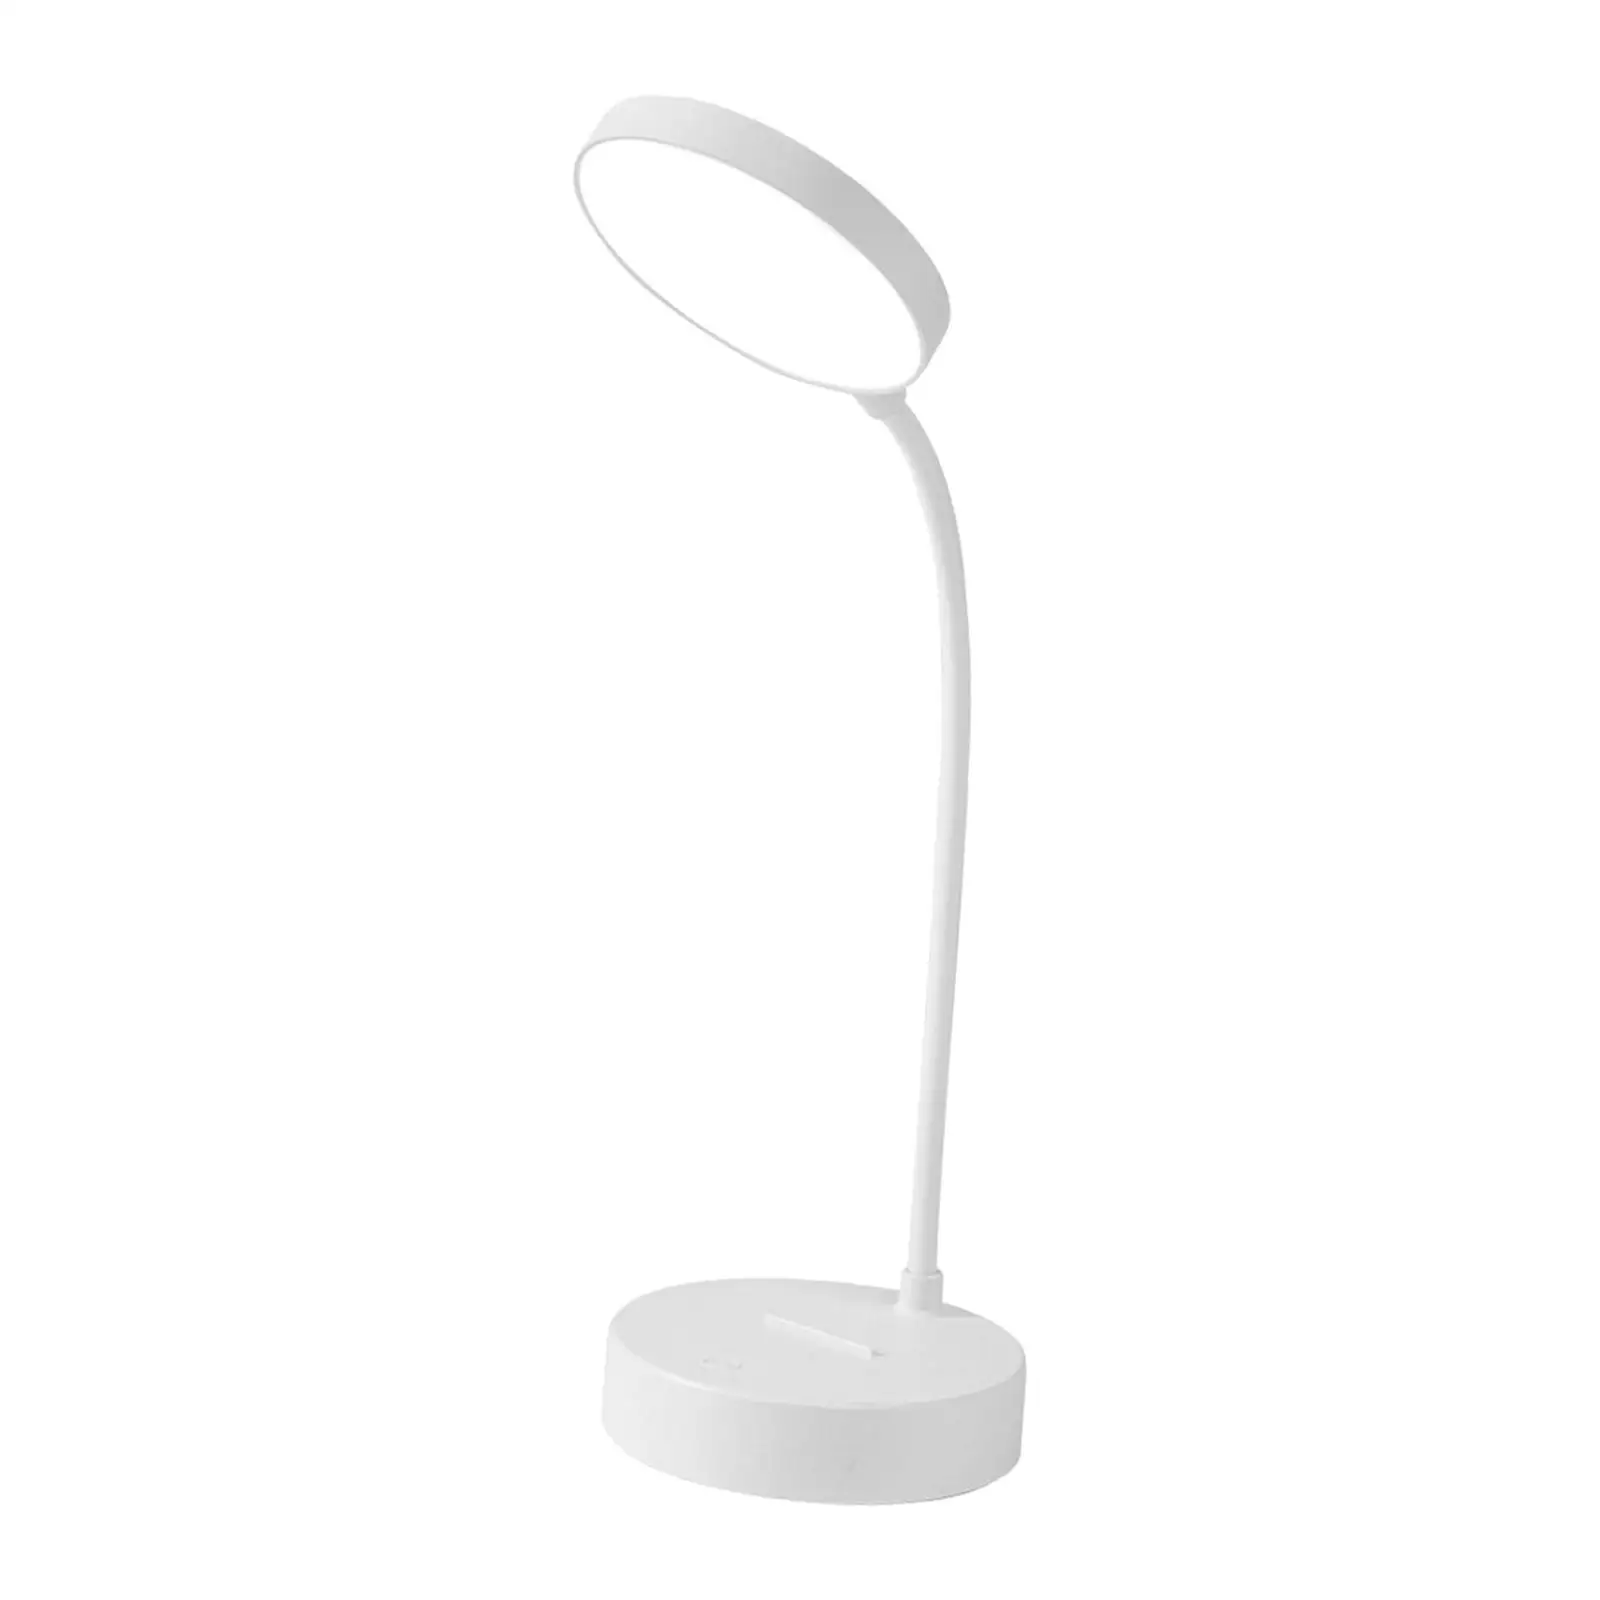 Portable Desk Lamp, Bedside Reading Lamp Eye Protection Flexible NightStand Lamp